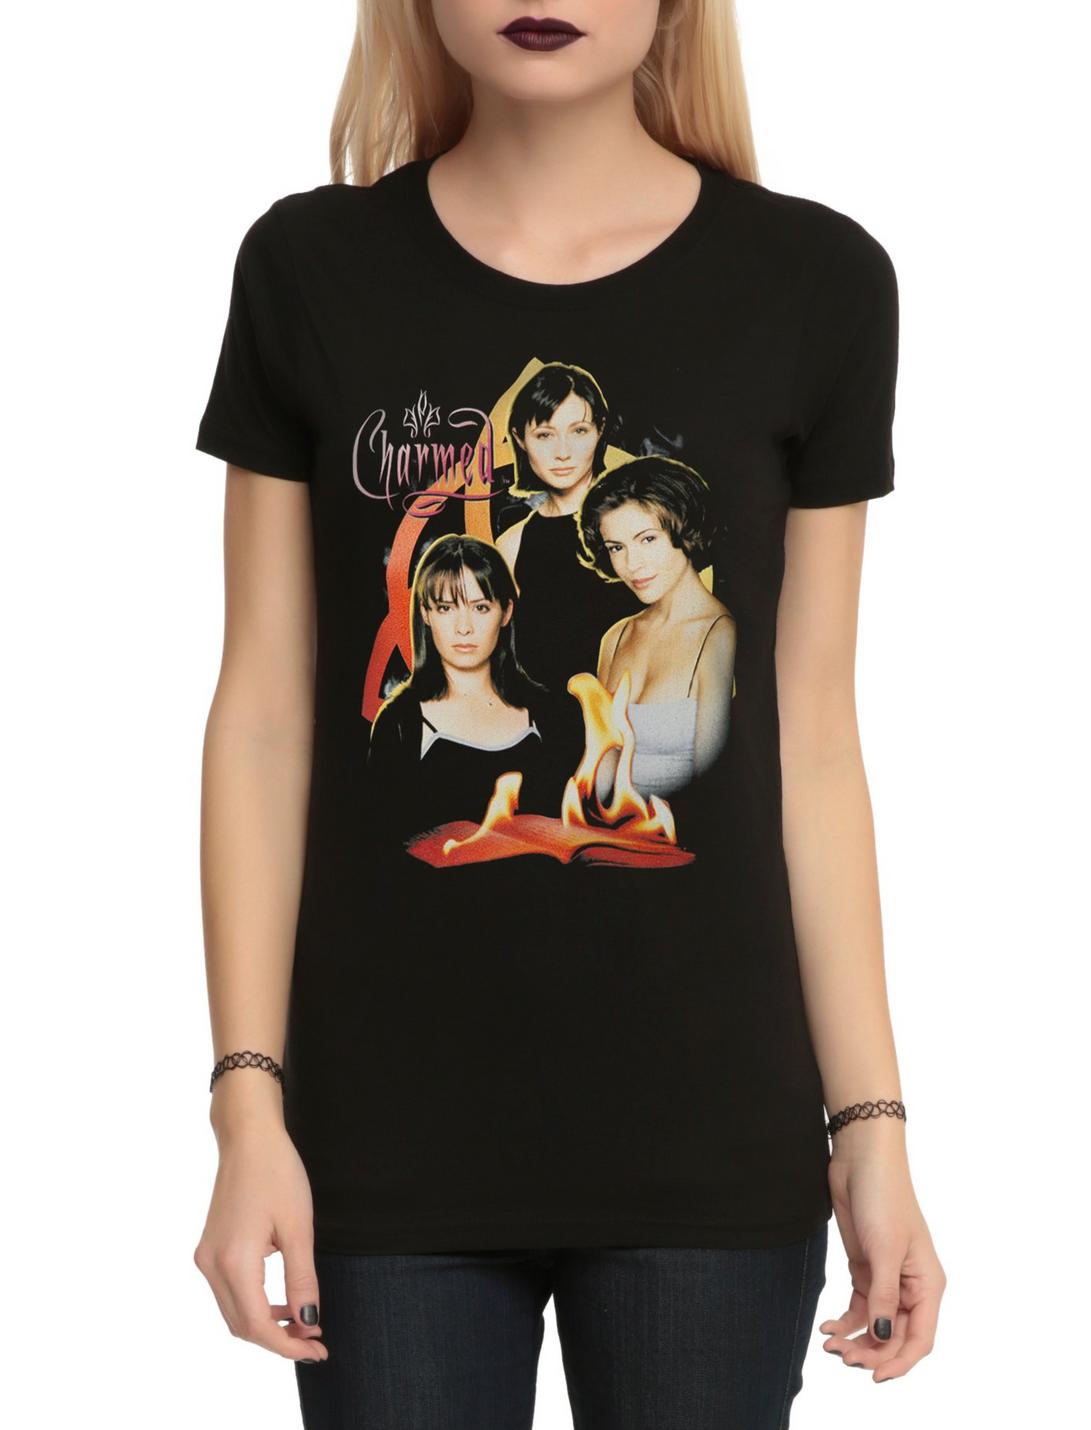 Charmed Trio Girls T-Shirt, BLACK, hi-res